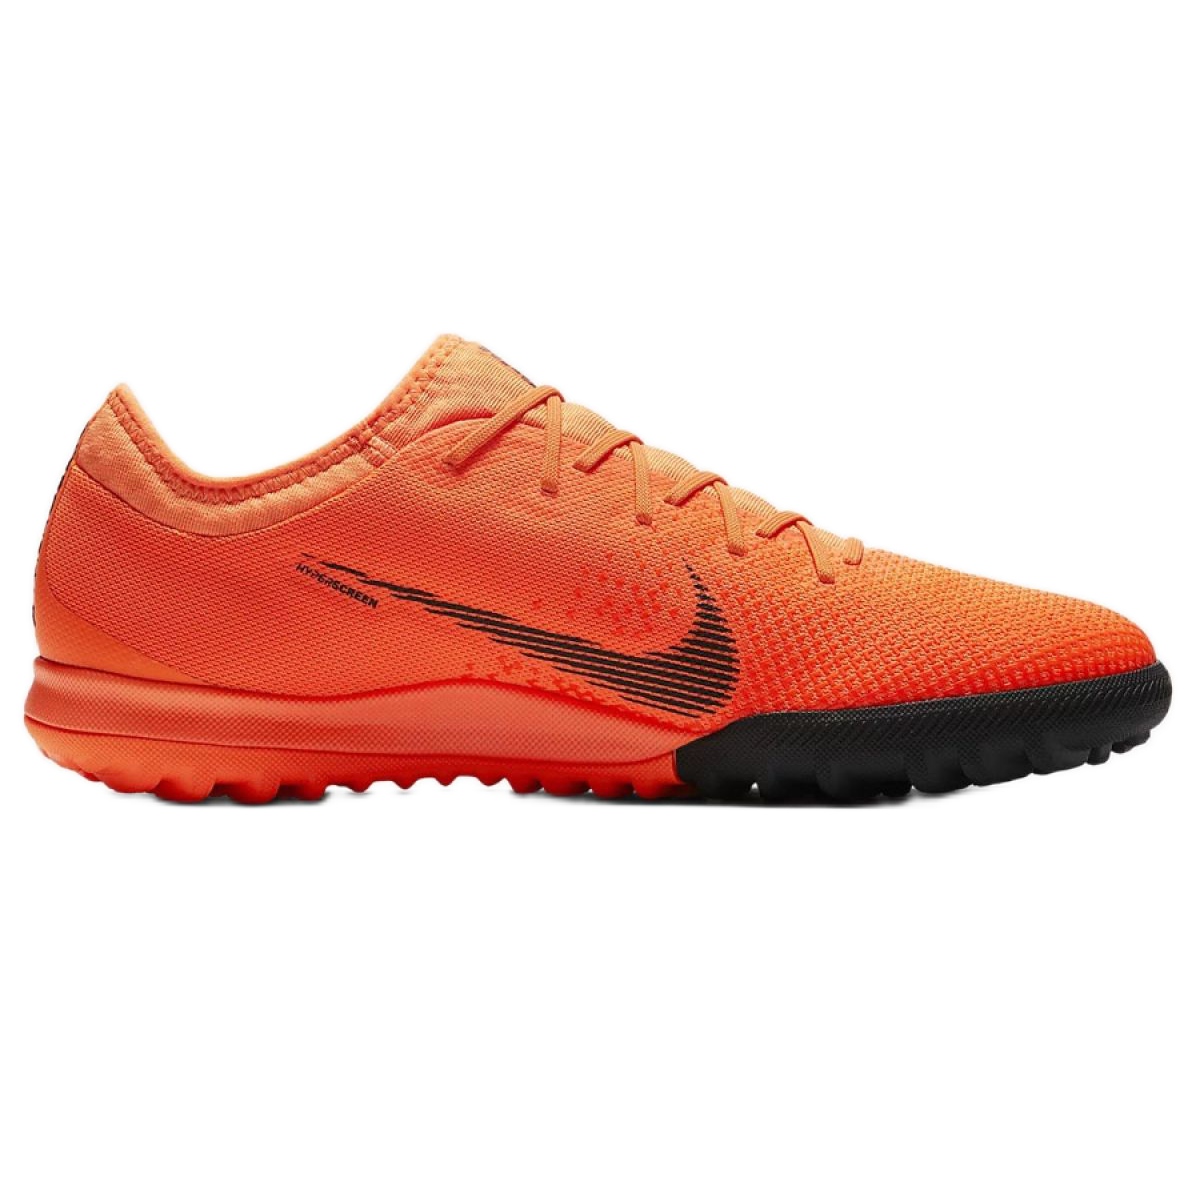 Perseguir Ministro Perfecto Nike Mercurial Vapor 12 Pro Tf M AH7388-810 soccer shoes orange orange -  KeeShoes